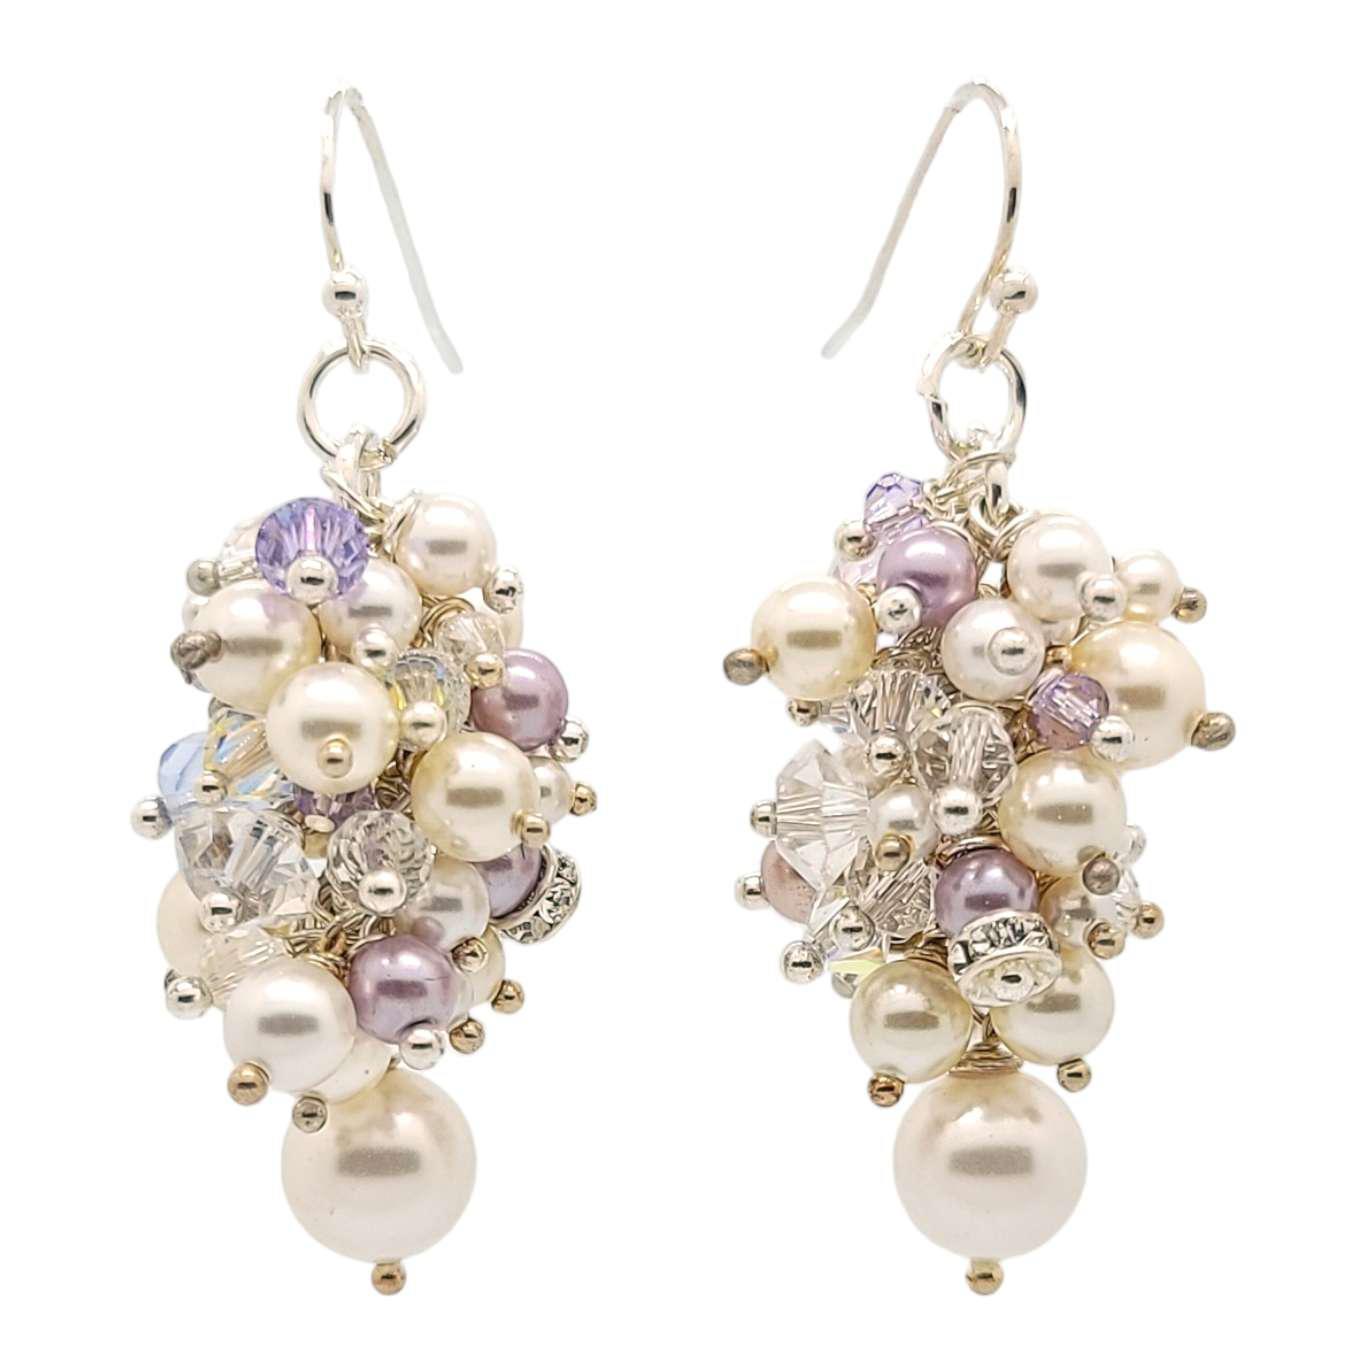 Earrings - Amethyst and White Pearl and Crystal Clusters by Sugar Sidewalk